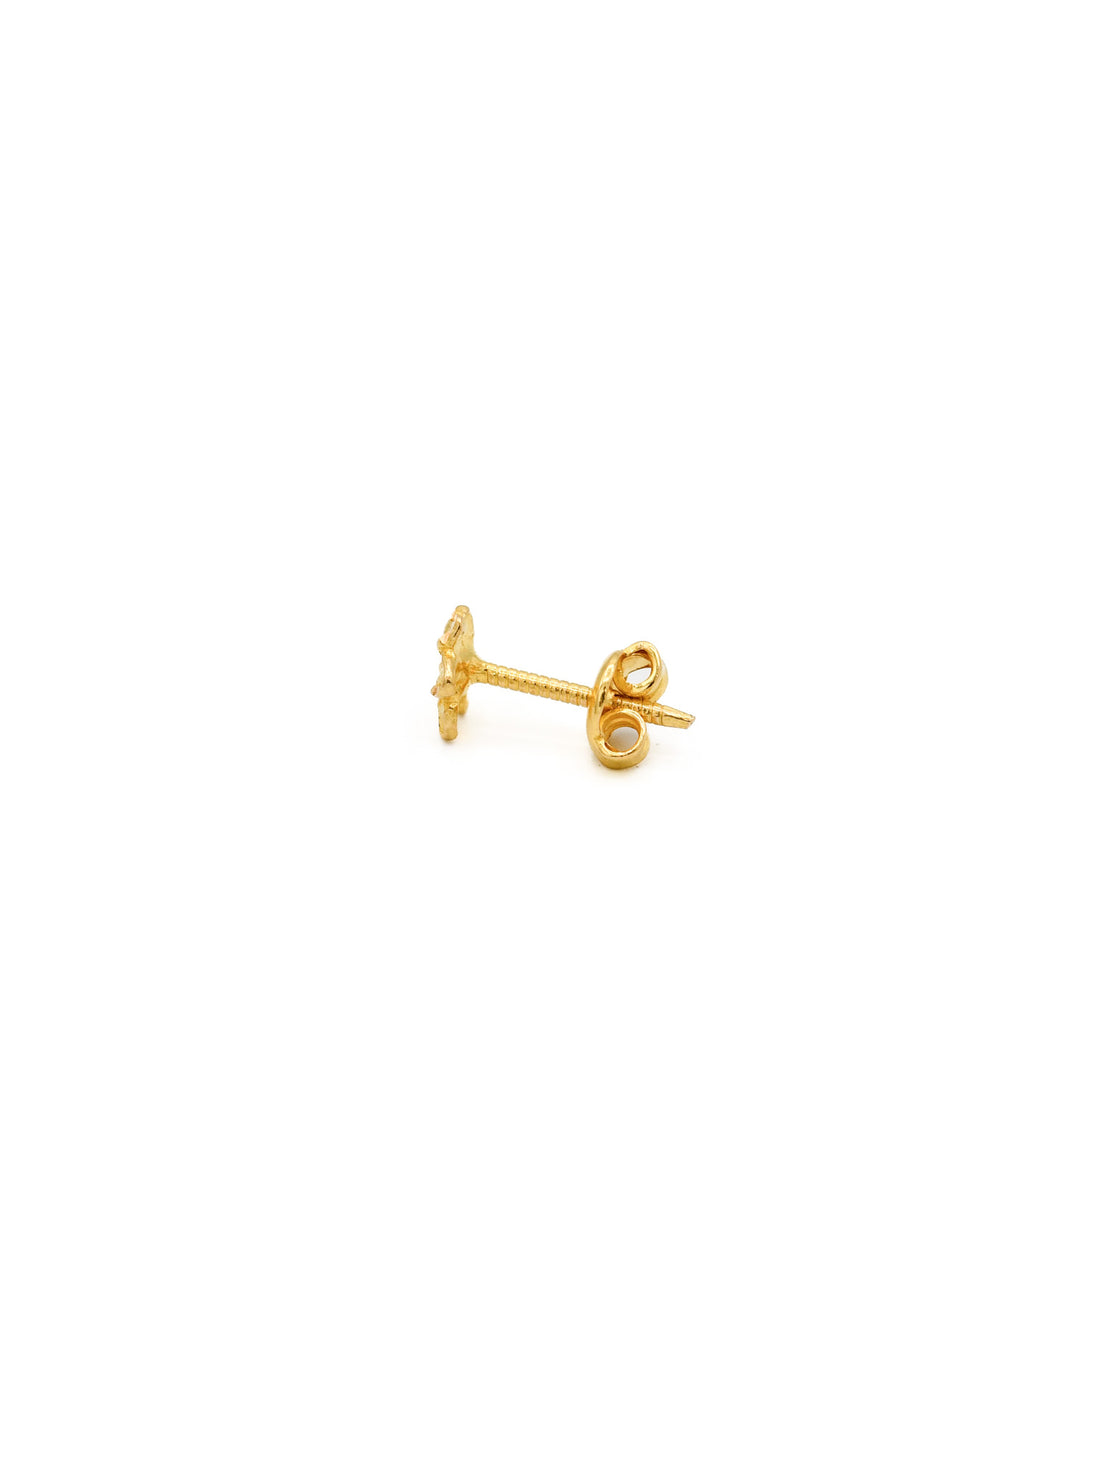 22ct Gold Flower Stud Earrings